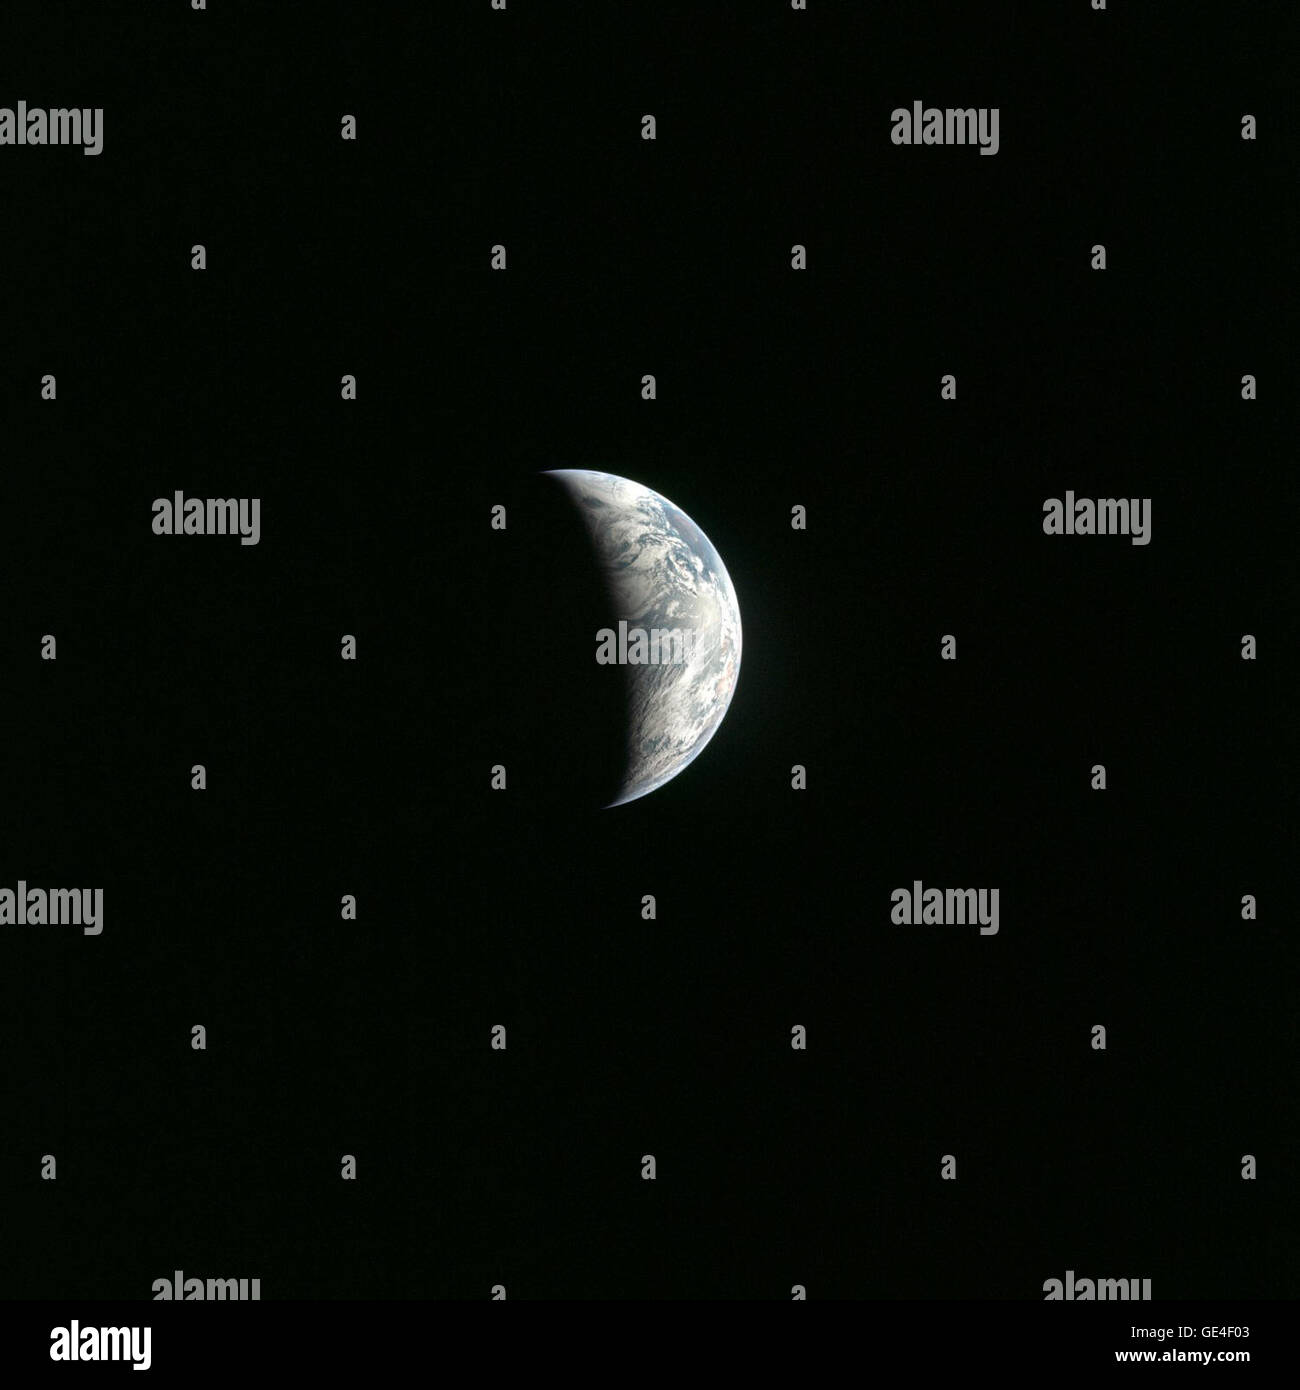 Apollo 11 Mission Image - View of Earth 5052125231 o Stock Photo